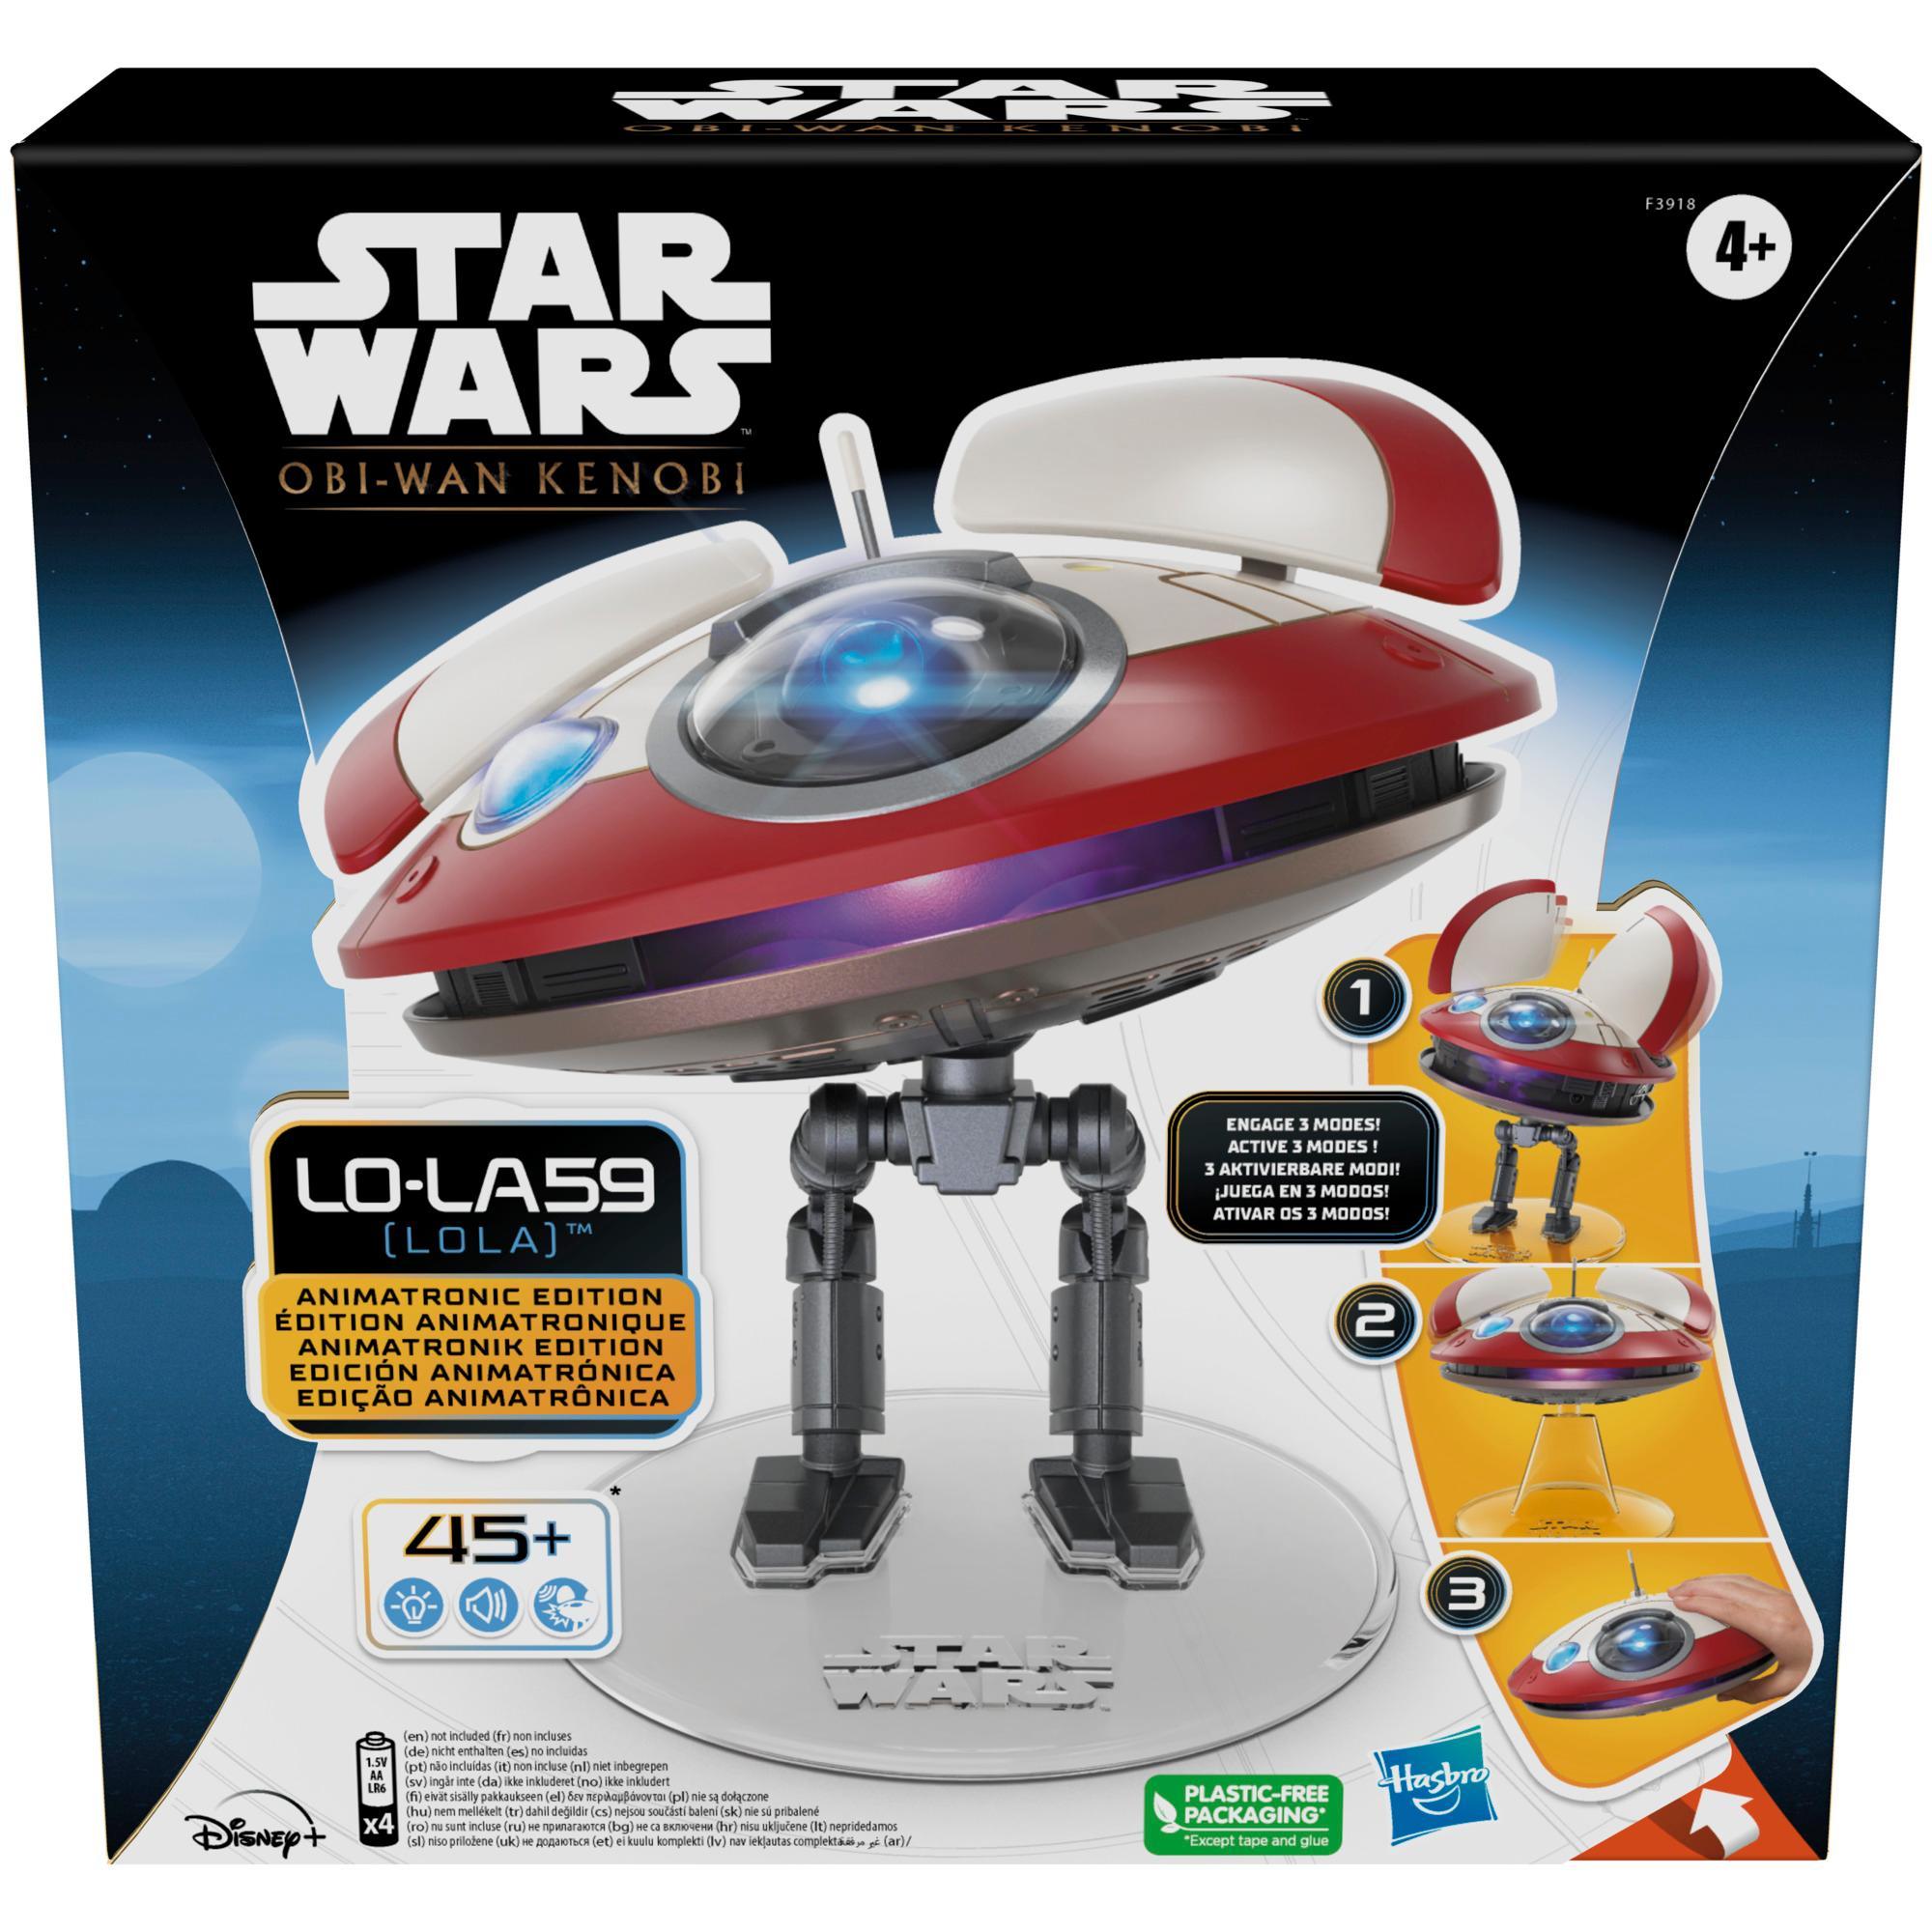 Star Wars L0-LA59 (Lola) Animatronic Edition product thumbnail 1